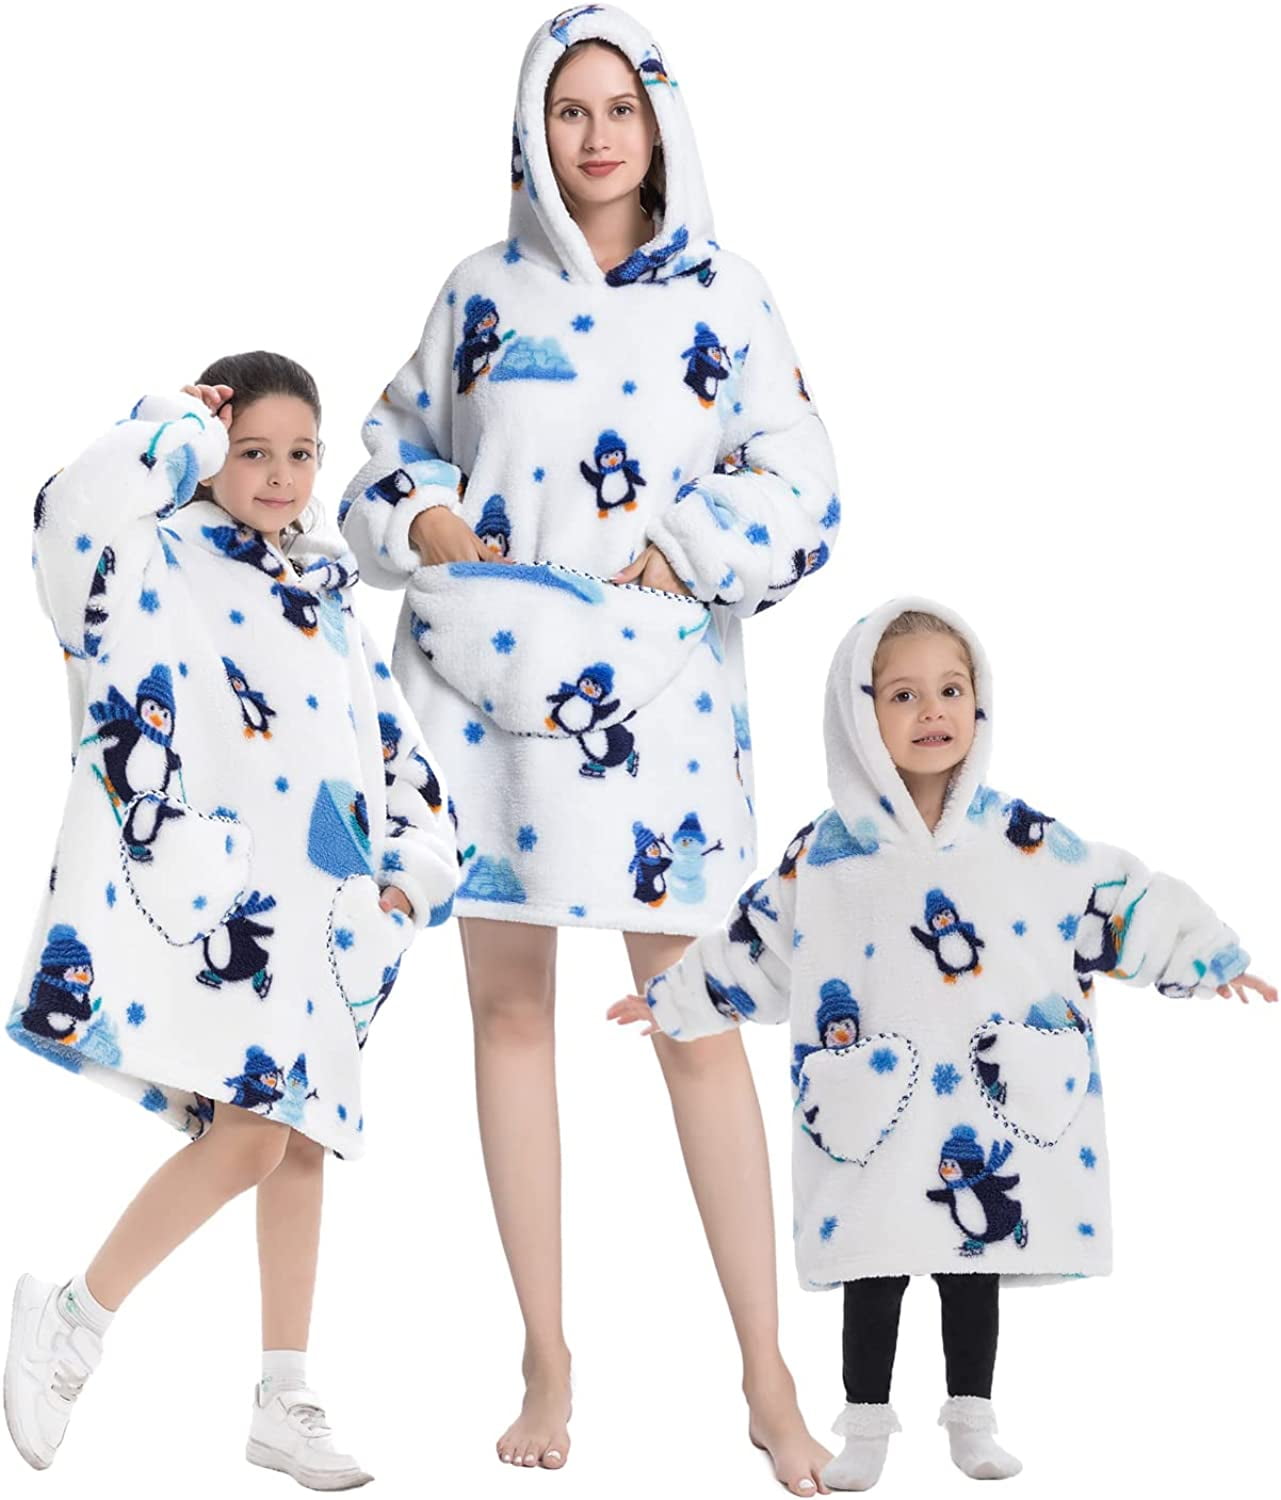 Oversized Hoodie Blanket Wearable Blanket Sweatshirt Plush Warm Cozy Fleece Top for Women Men Kids ec4eb0ca 0ca9 4c70 9ae5 eeed6e2d353a.600a62490f5a57a1fe25b2a2439b3076